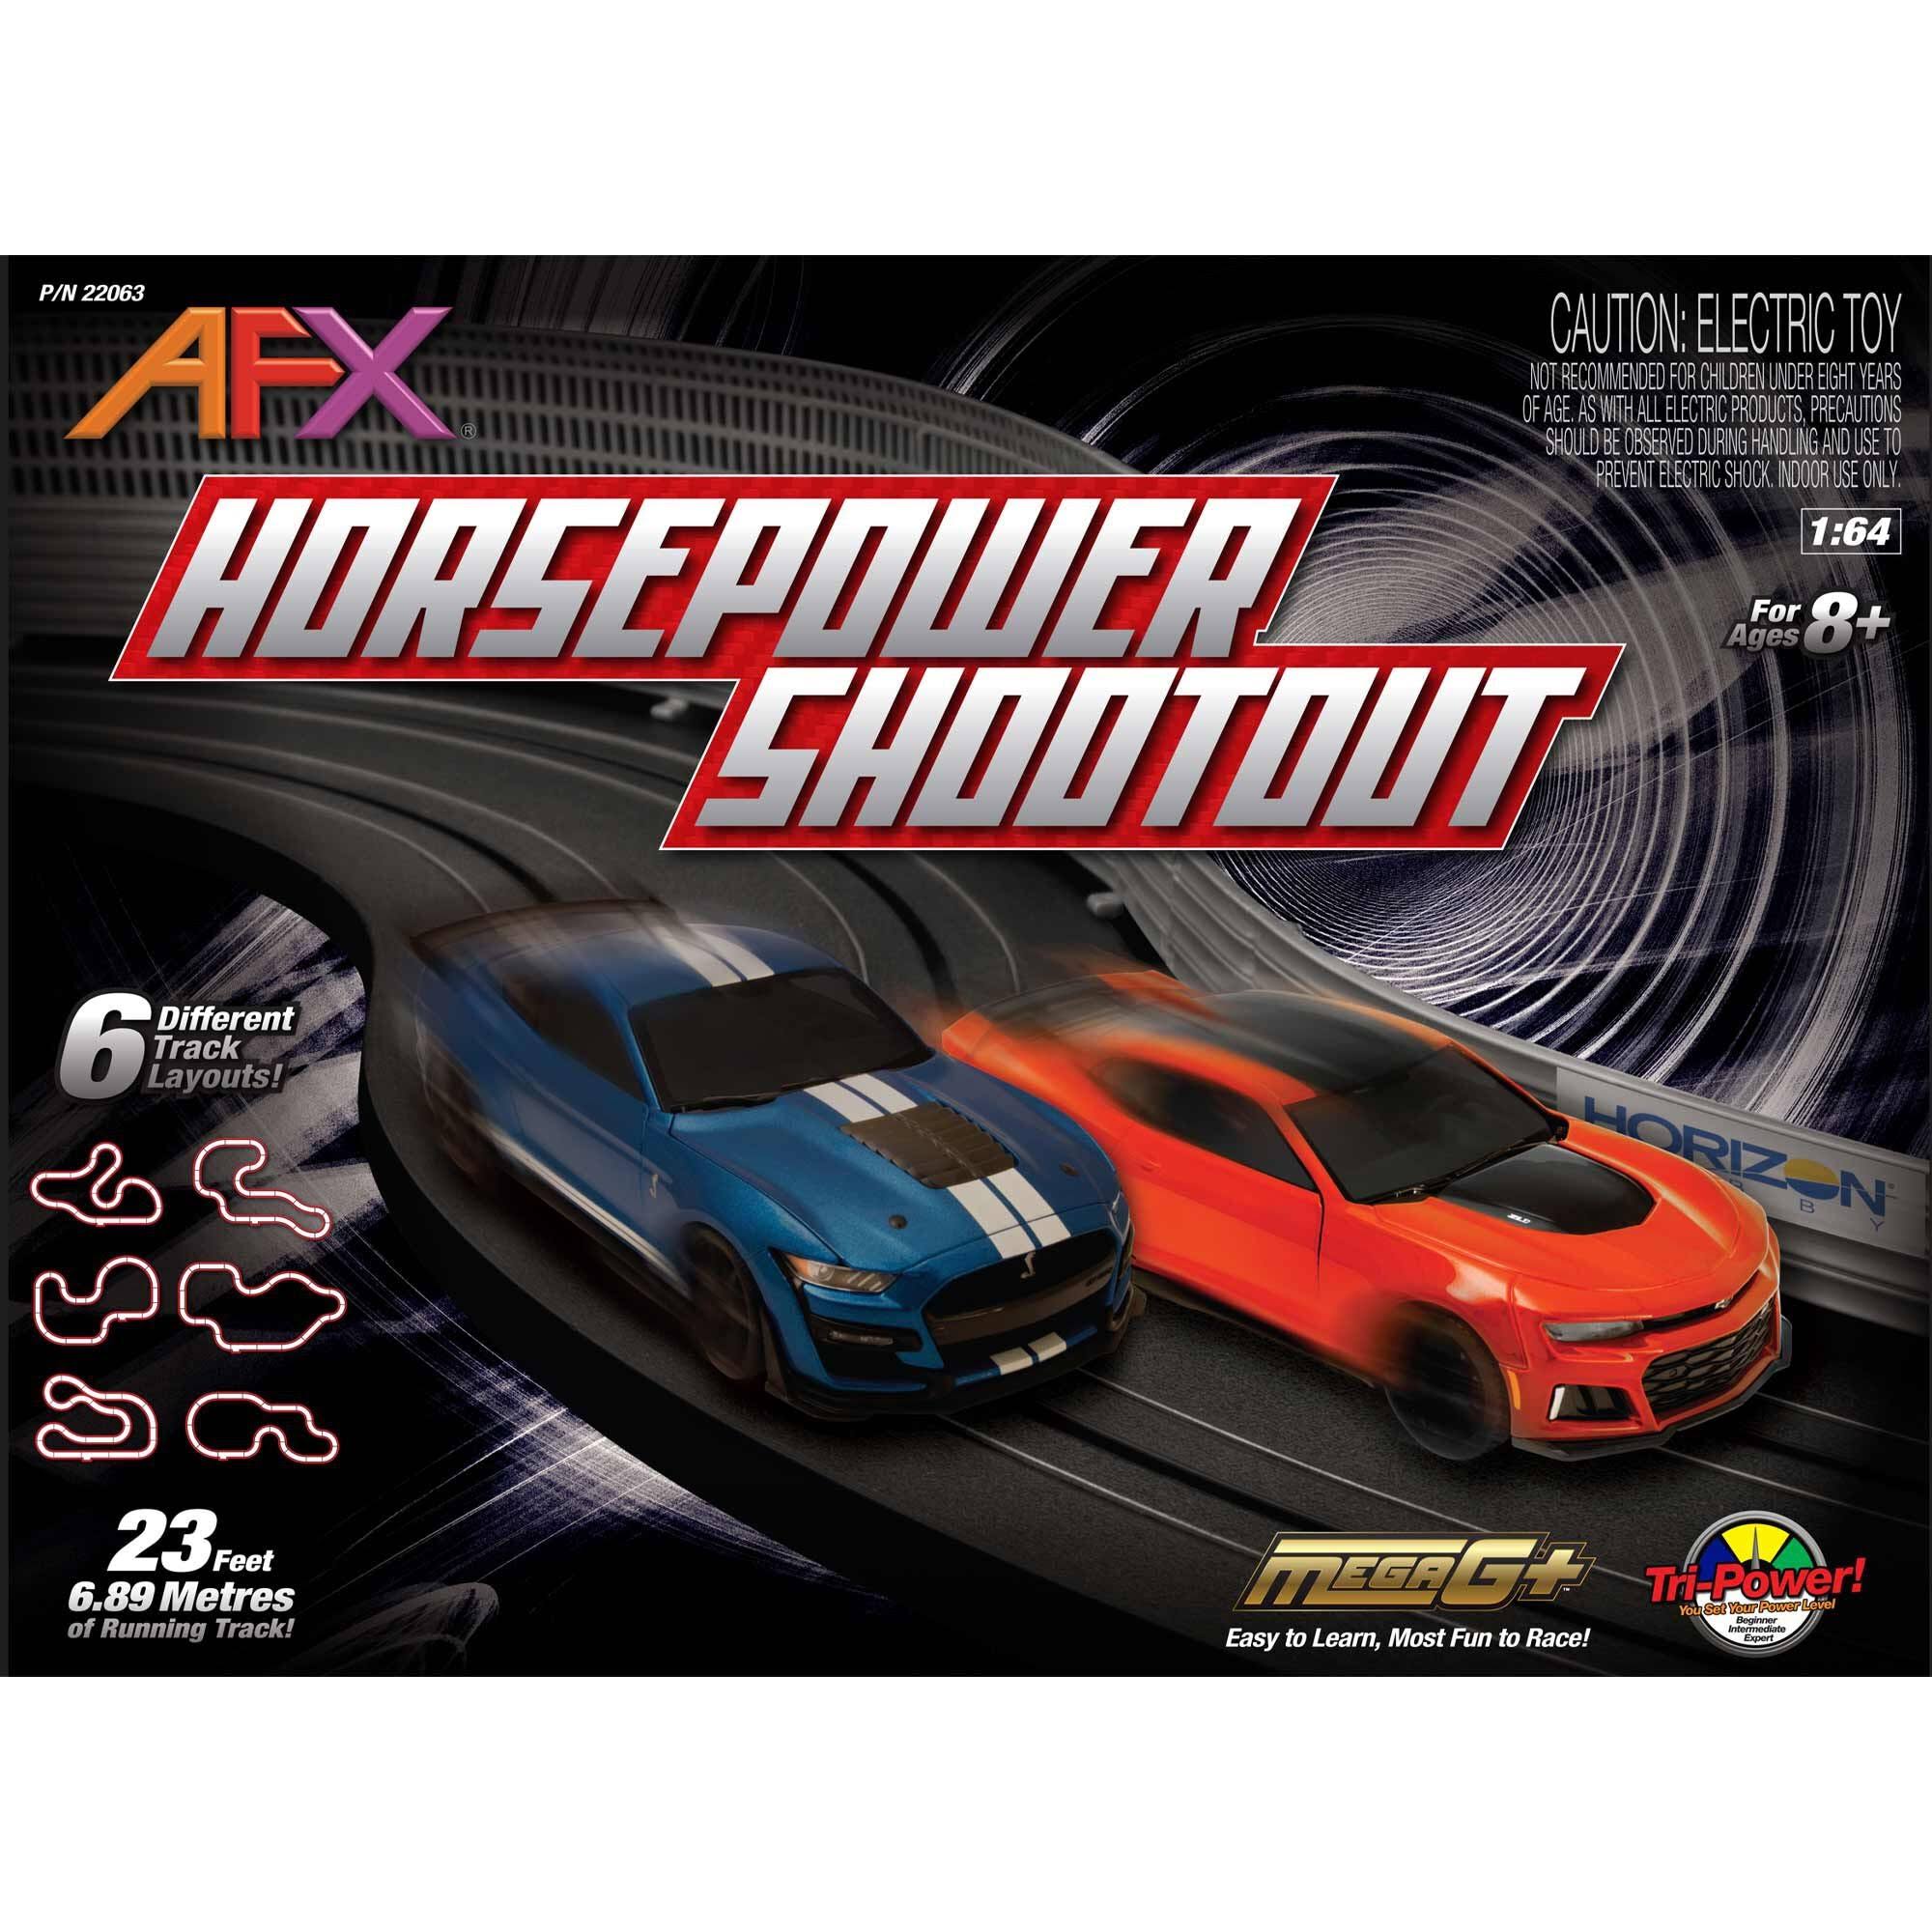 AFX Horsepower Shootout Set (Limited Edition) AFX22063